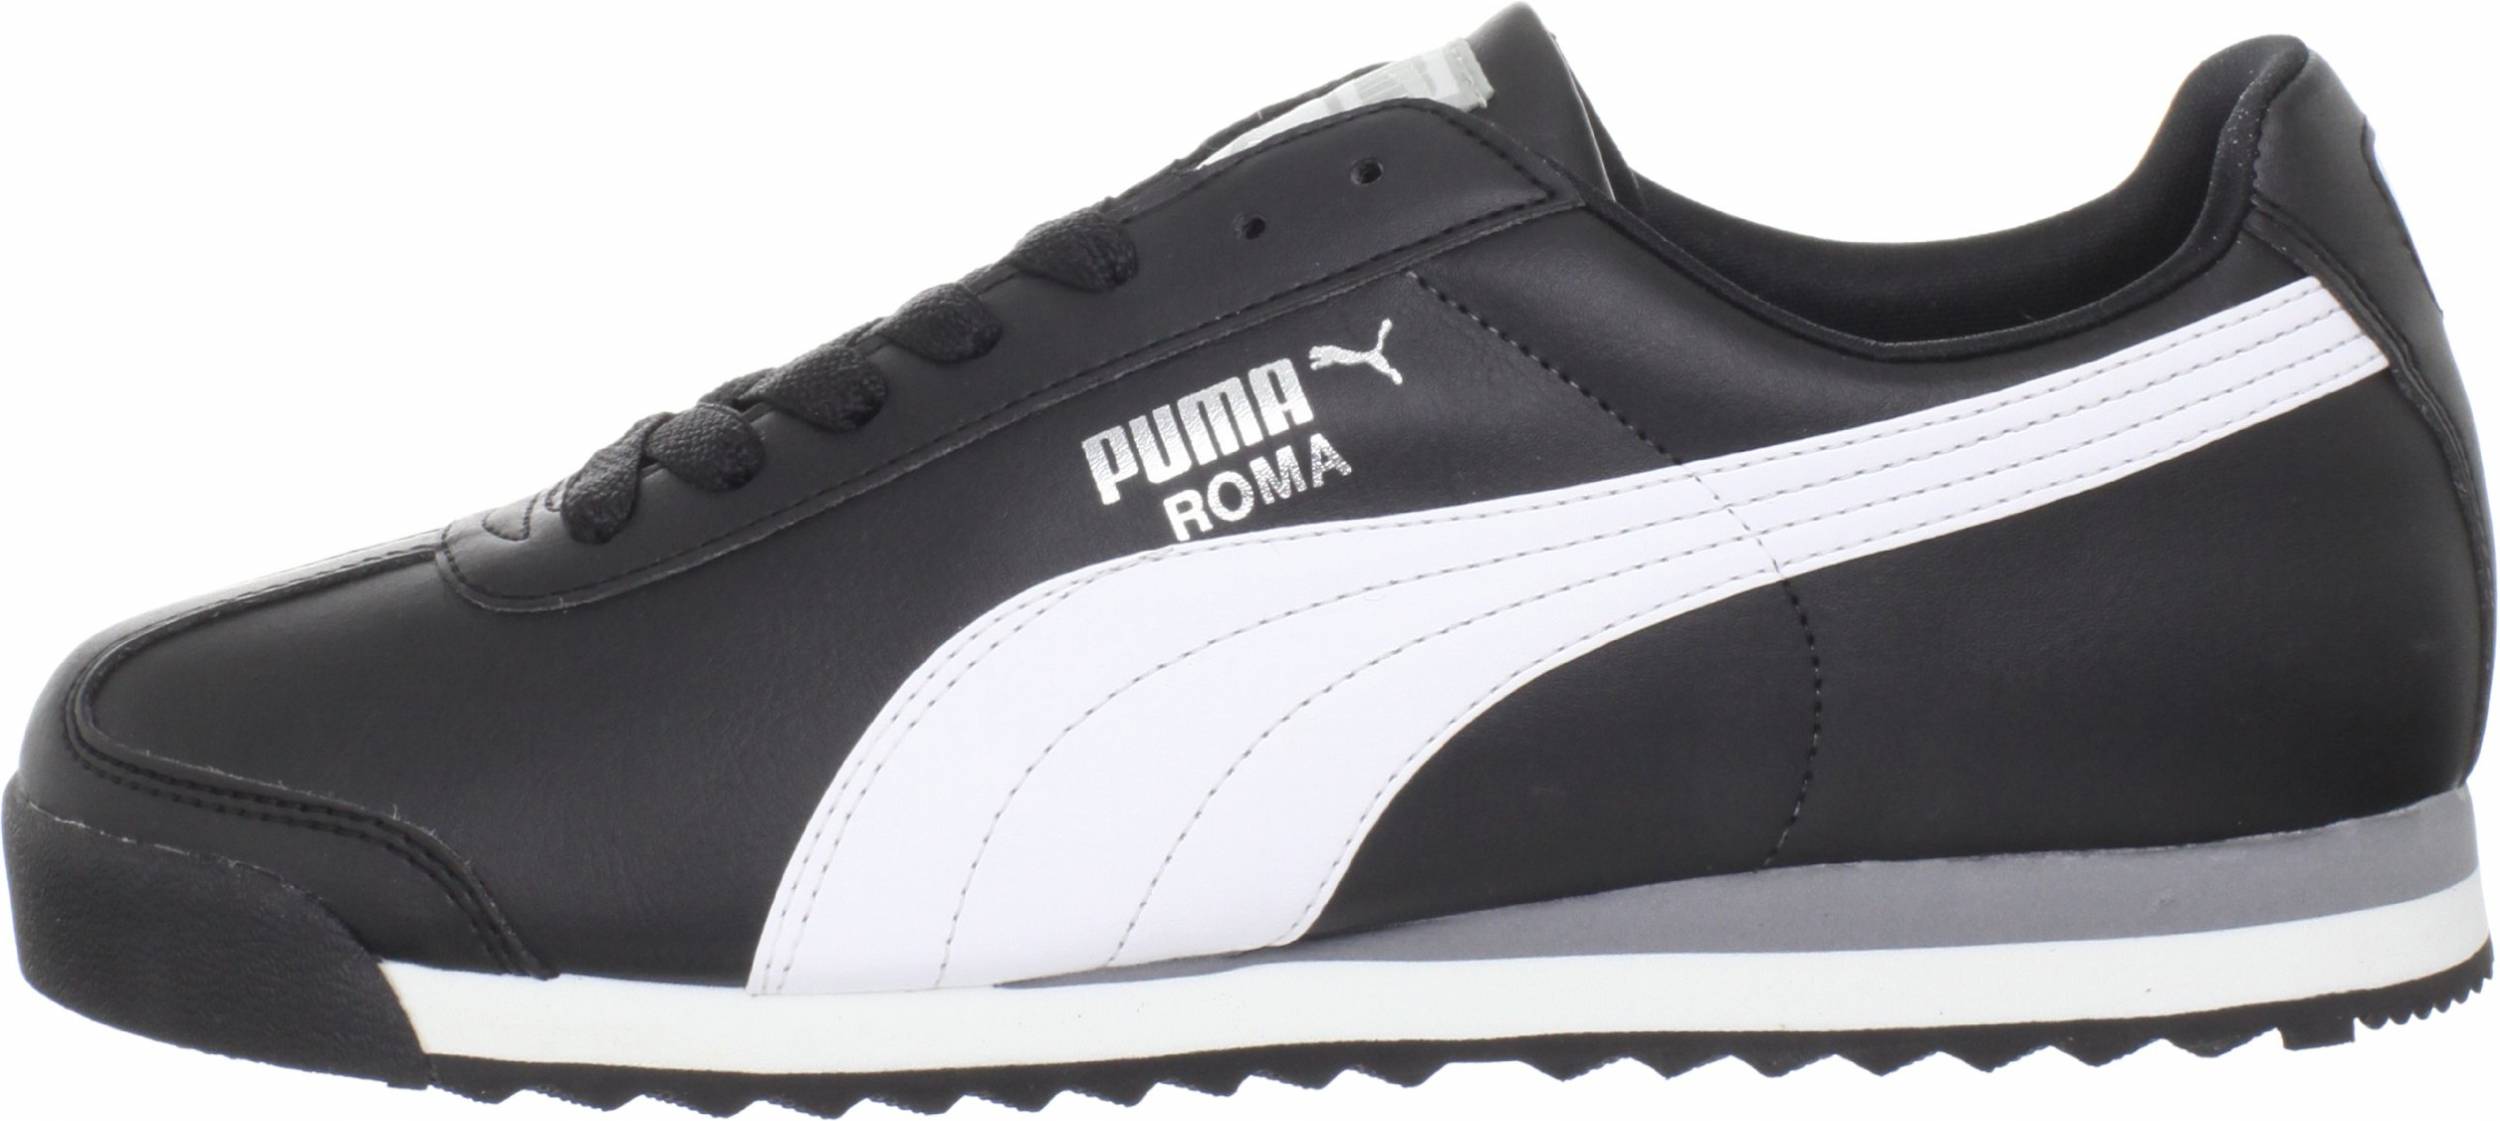 plain black puma shoes